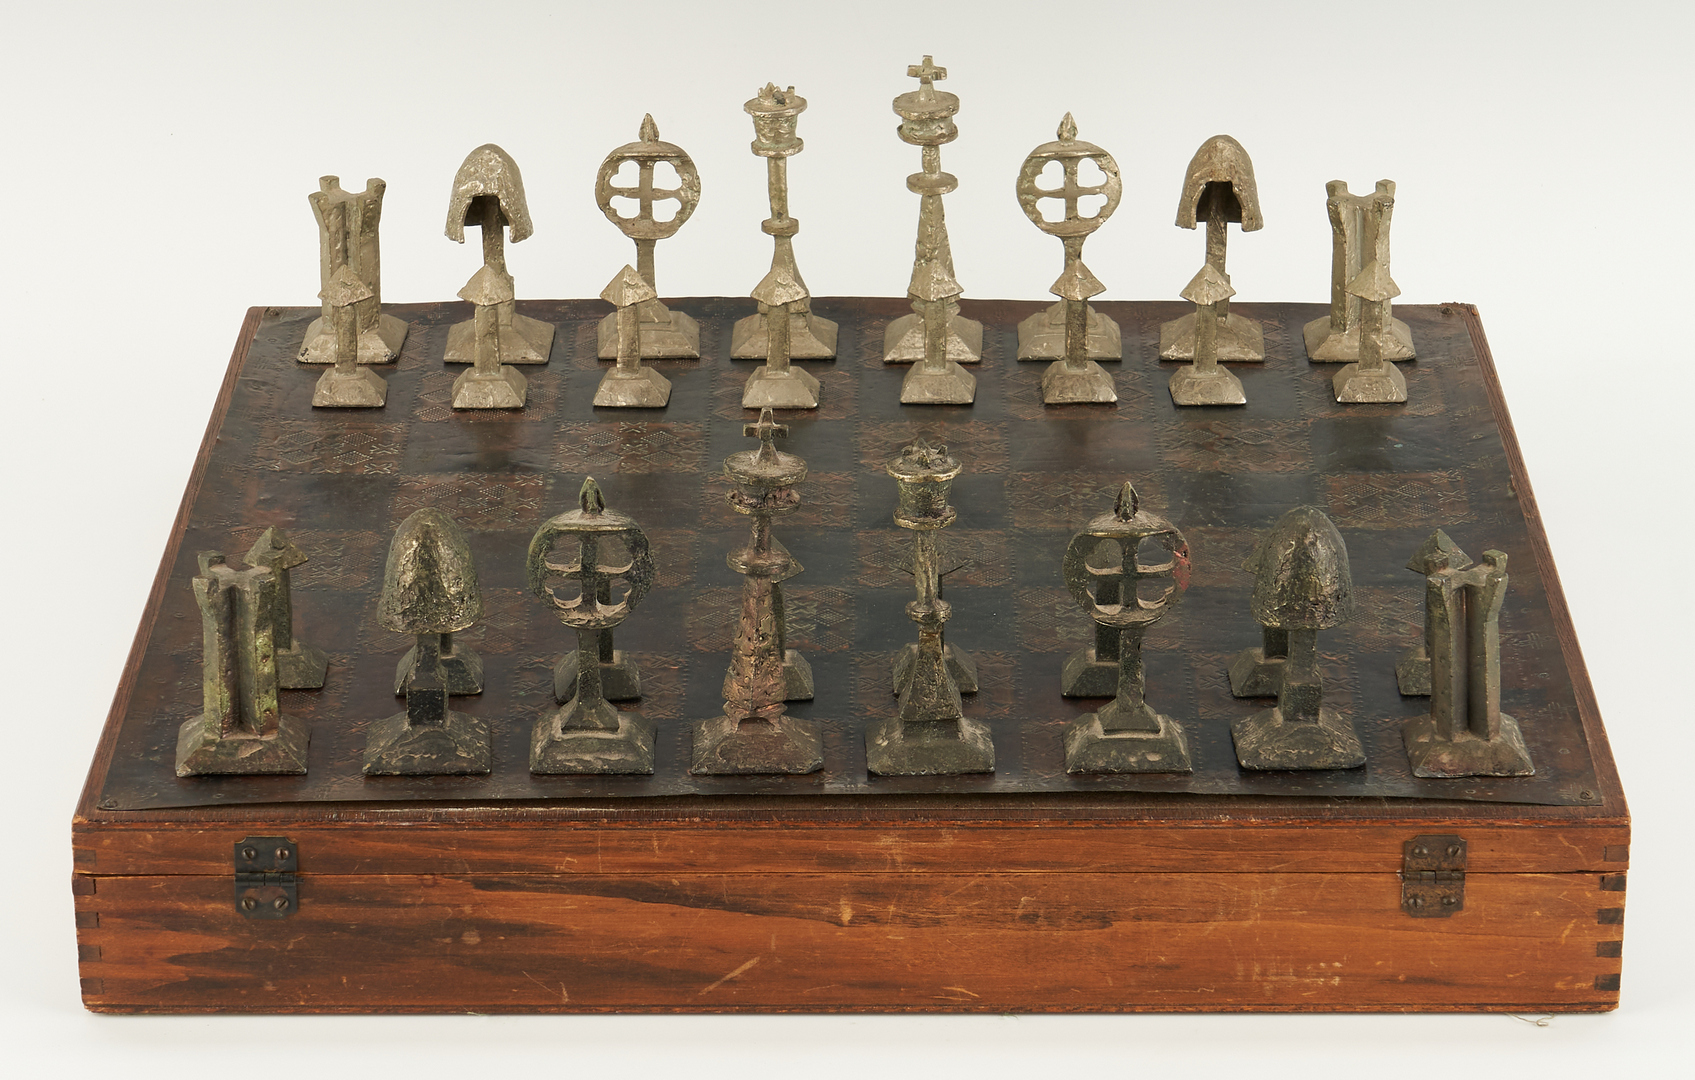 Lot 551: Richard L. Synek/Charles Martel Chess Set